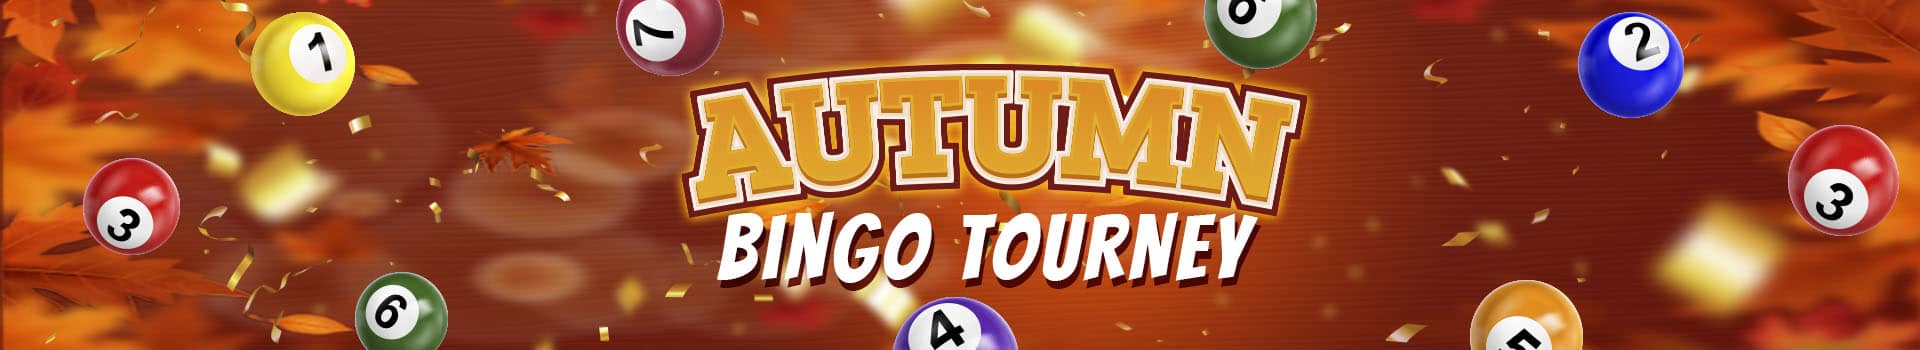 Autumn Bingo Tourney at CyberBingo